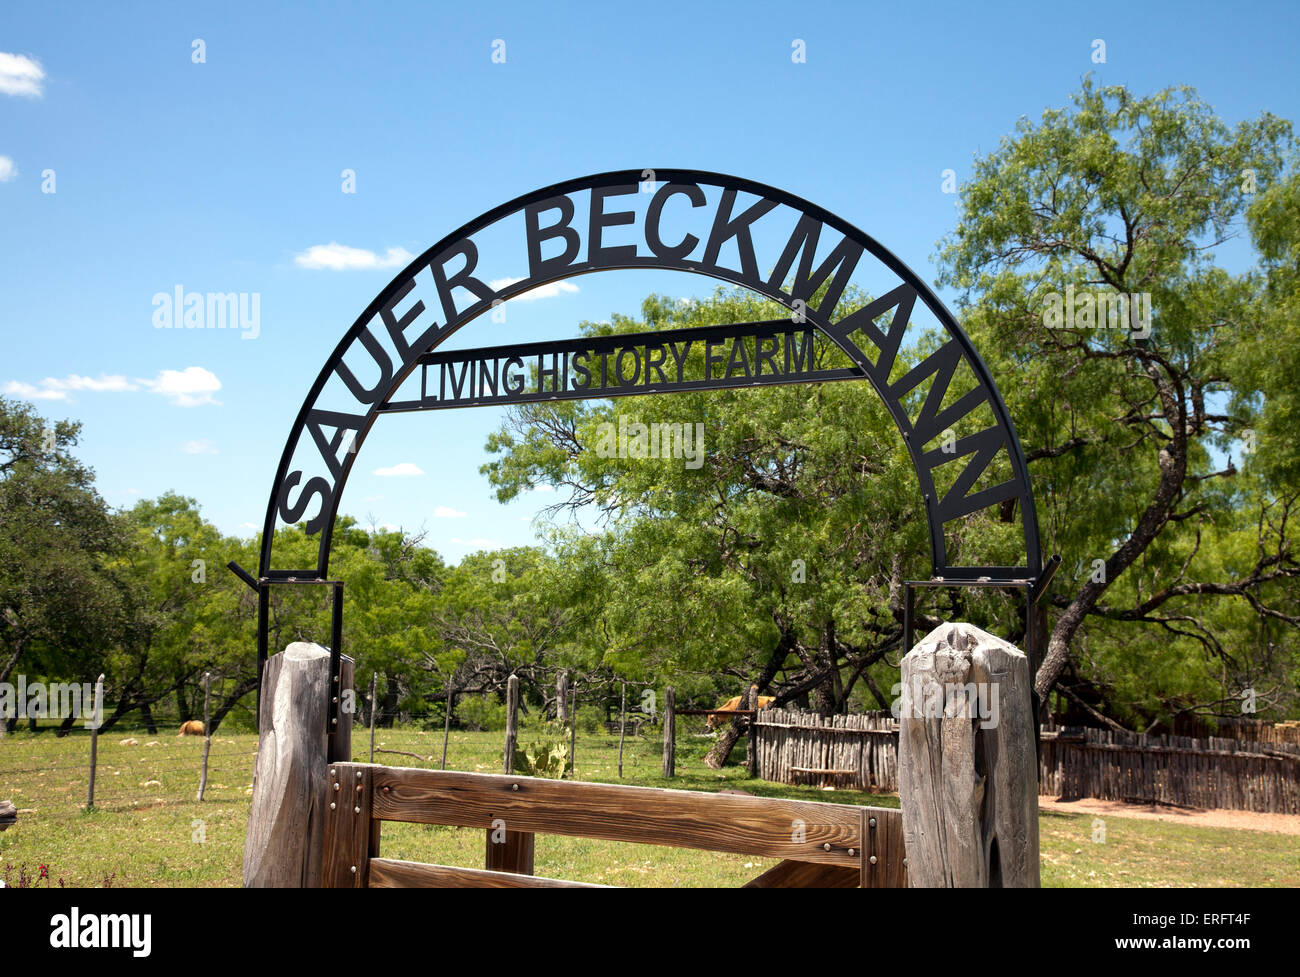 Cancello di ingresso, Sauer-Beckman Storia viva Farm at LBJ stato parco e sito storico, Stonewall, Texas. Foto Stock